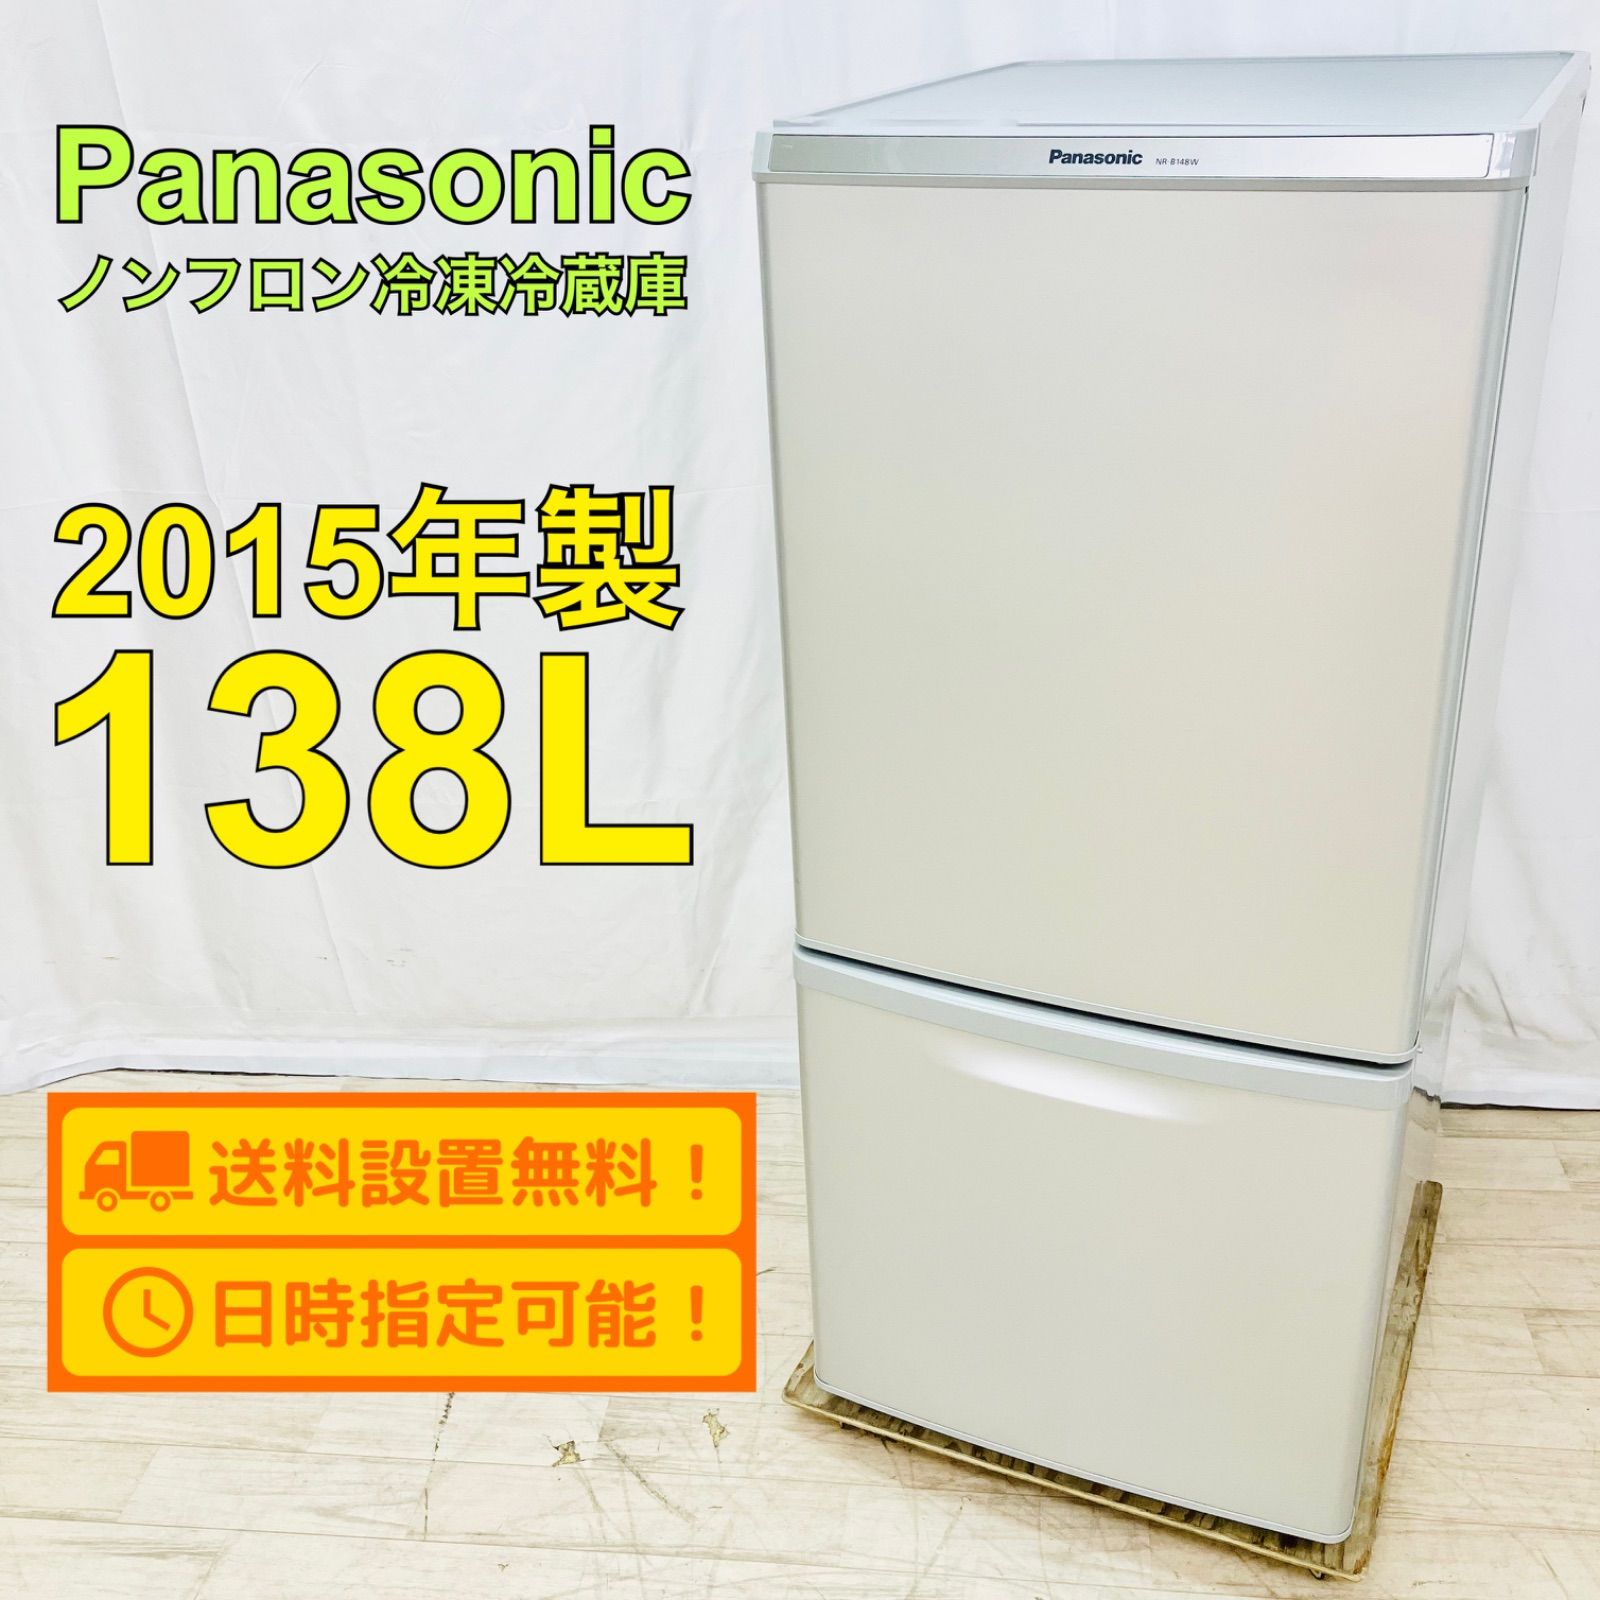 Panasonic パナソニック 138L 2ドア 冷蔵庫 NR-B148W-S 2015年製